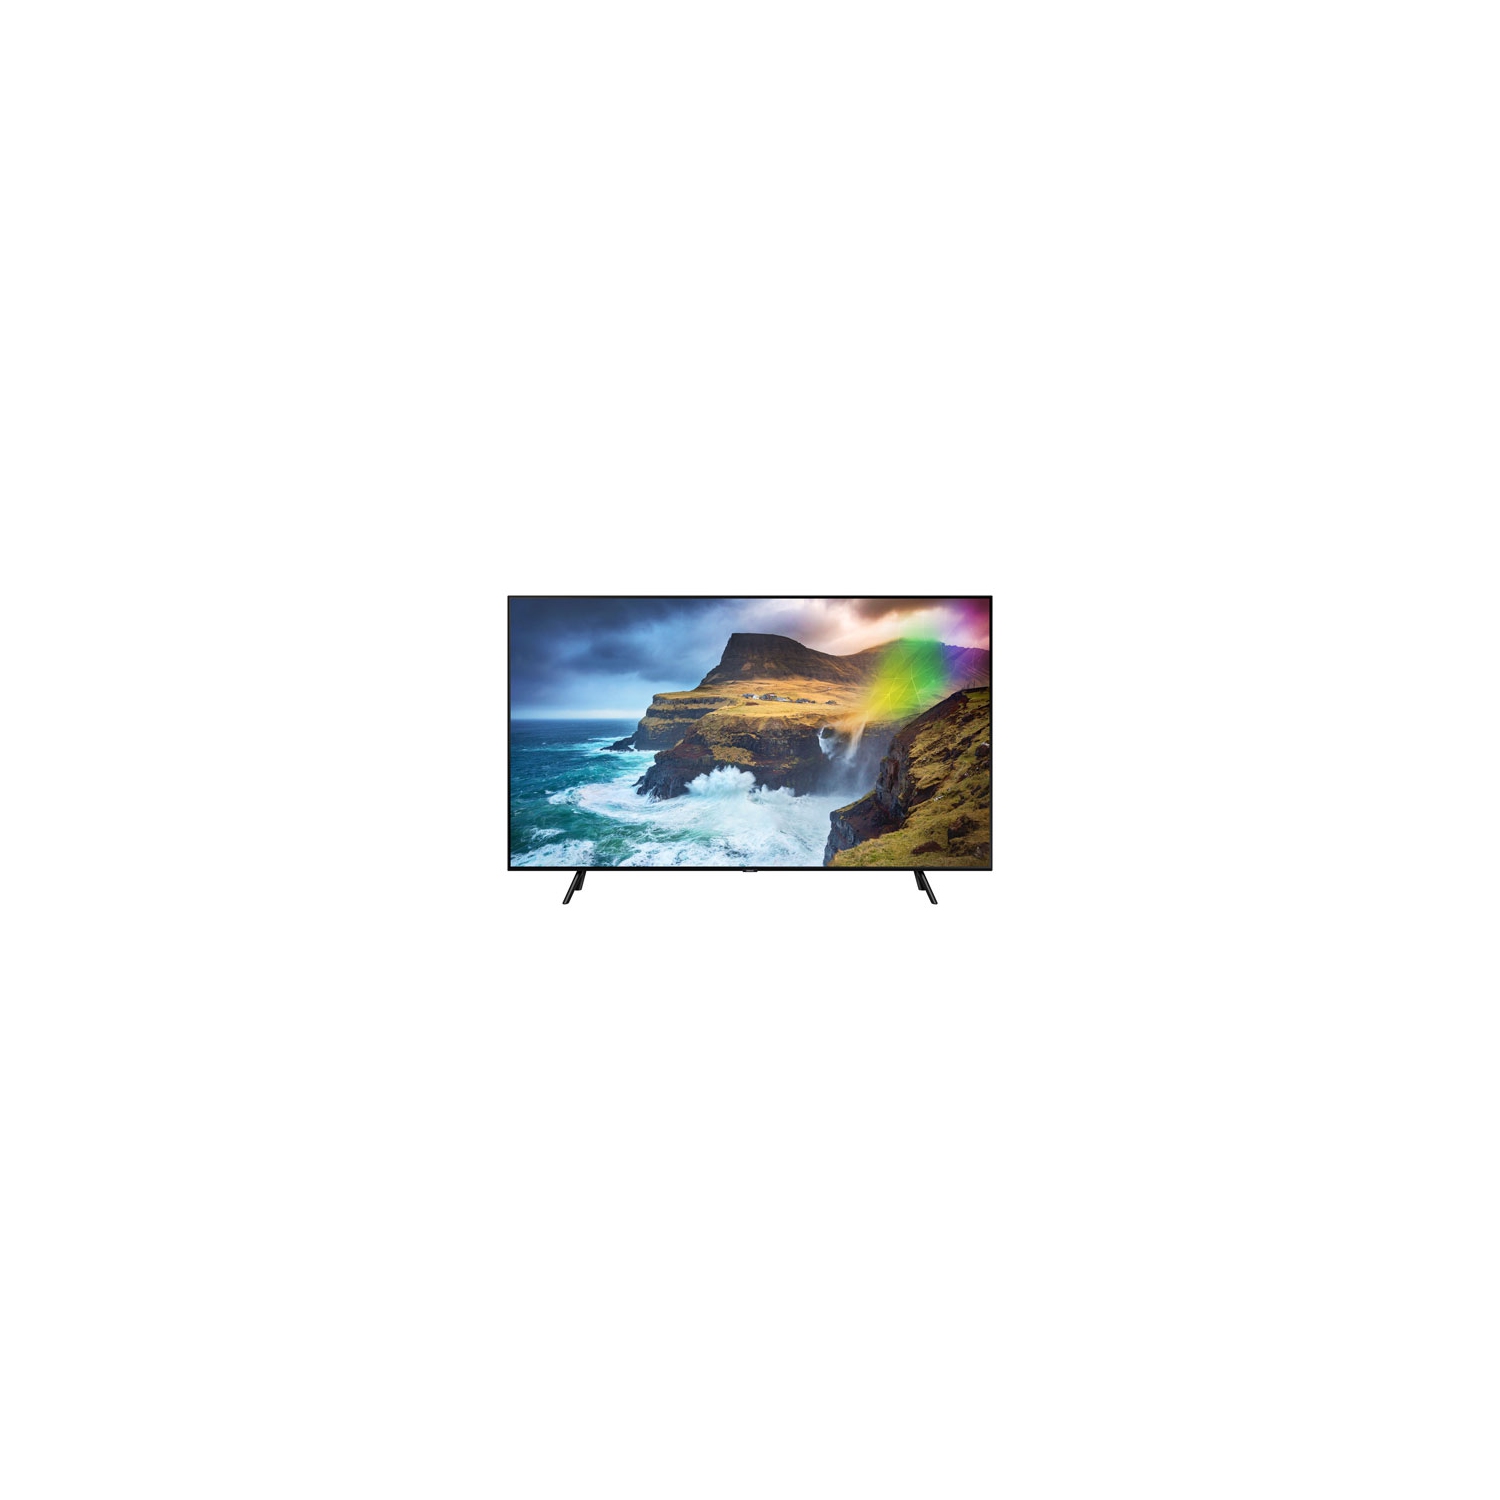 Samsung 49" 4K UHD HDR QLED Tizen Smart TV (QN49Q70RAFXZC) - Open Box